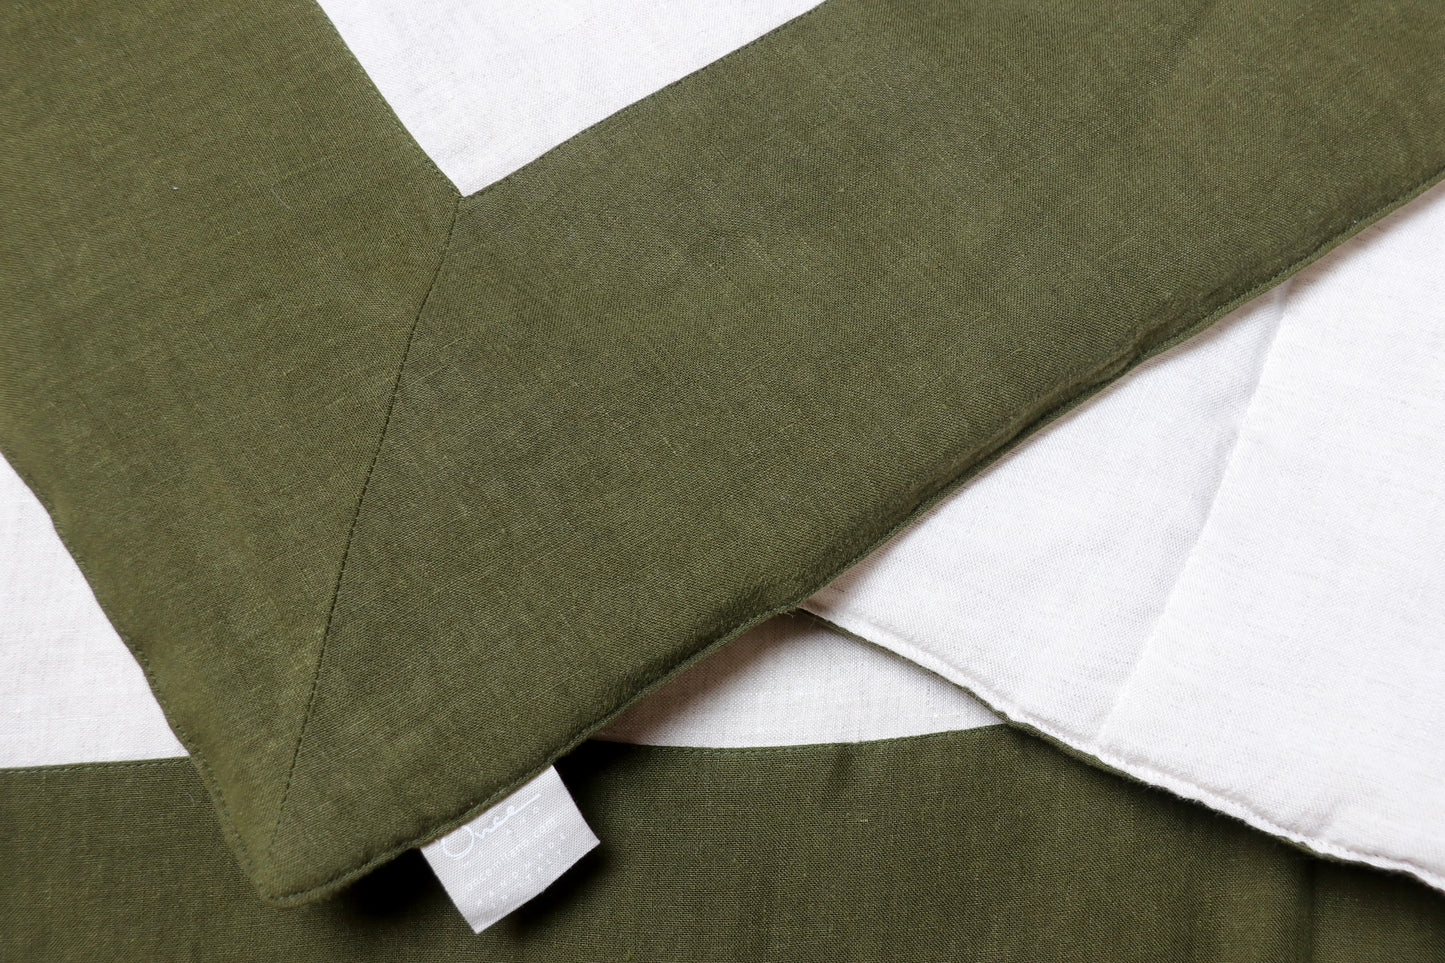 linen blanket with green border in US queen size, sample item